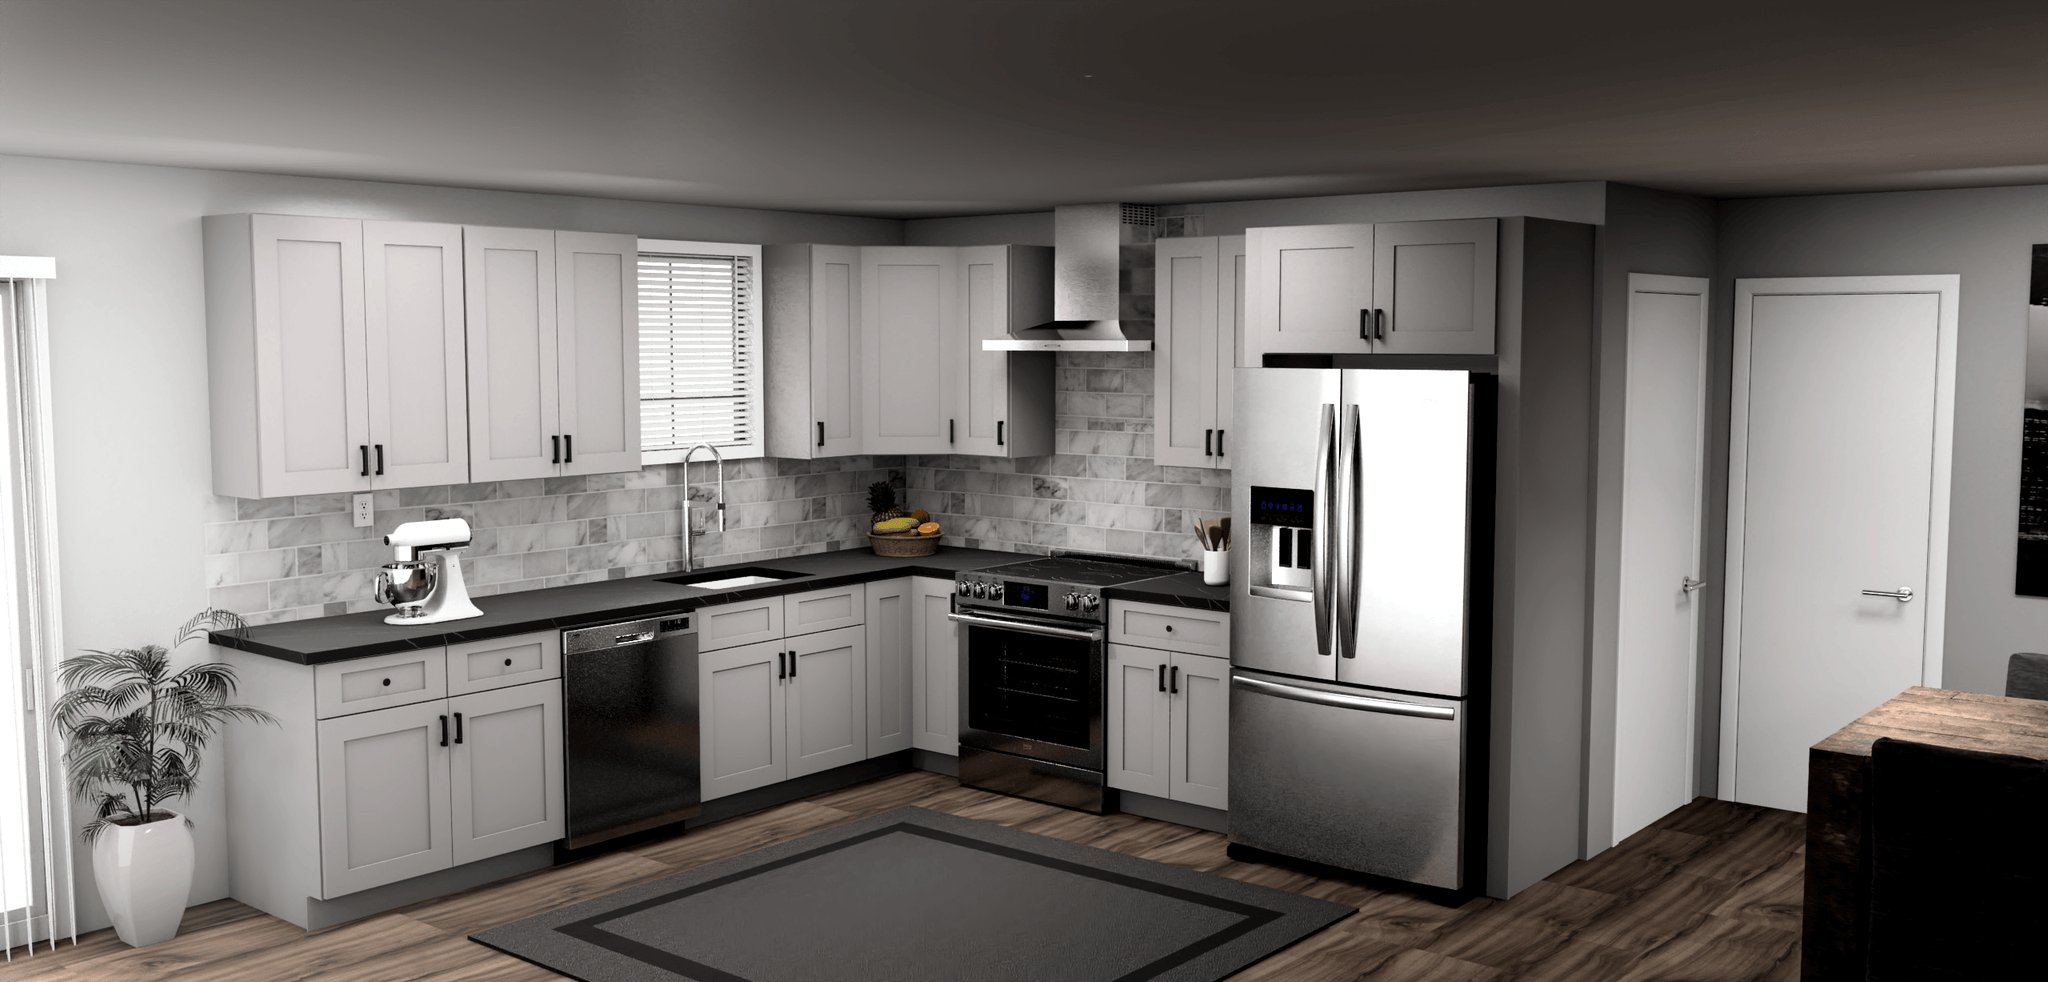 Fabuwood Allure Galaxy Nickel 11 x 11 L Shaped Kitchen Main Layout Photo